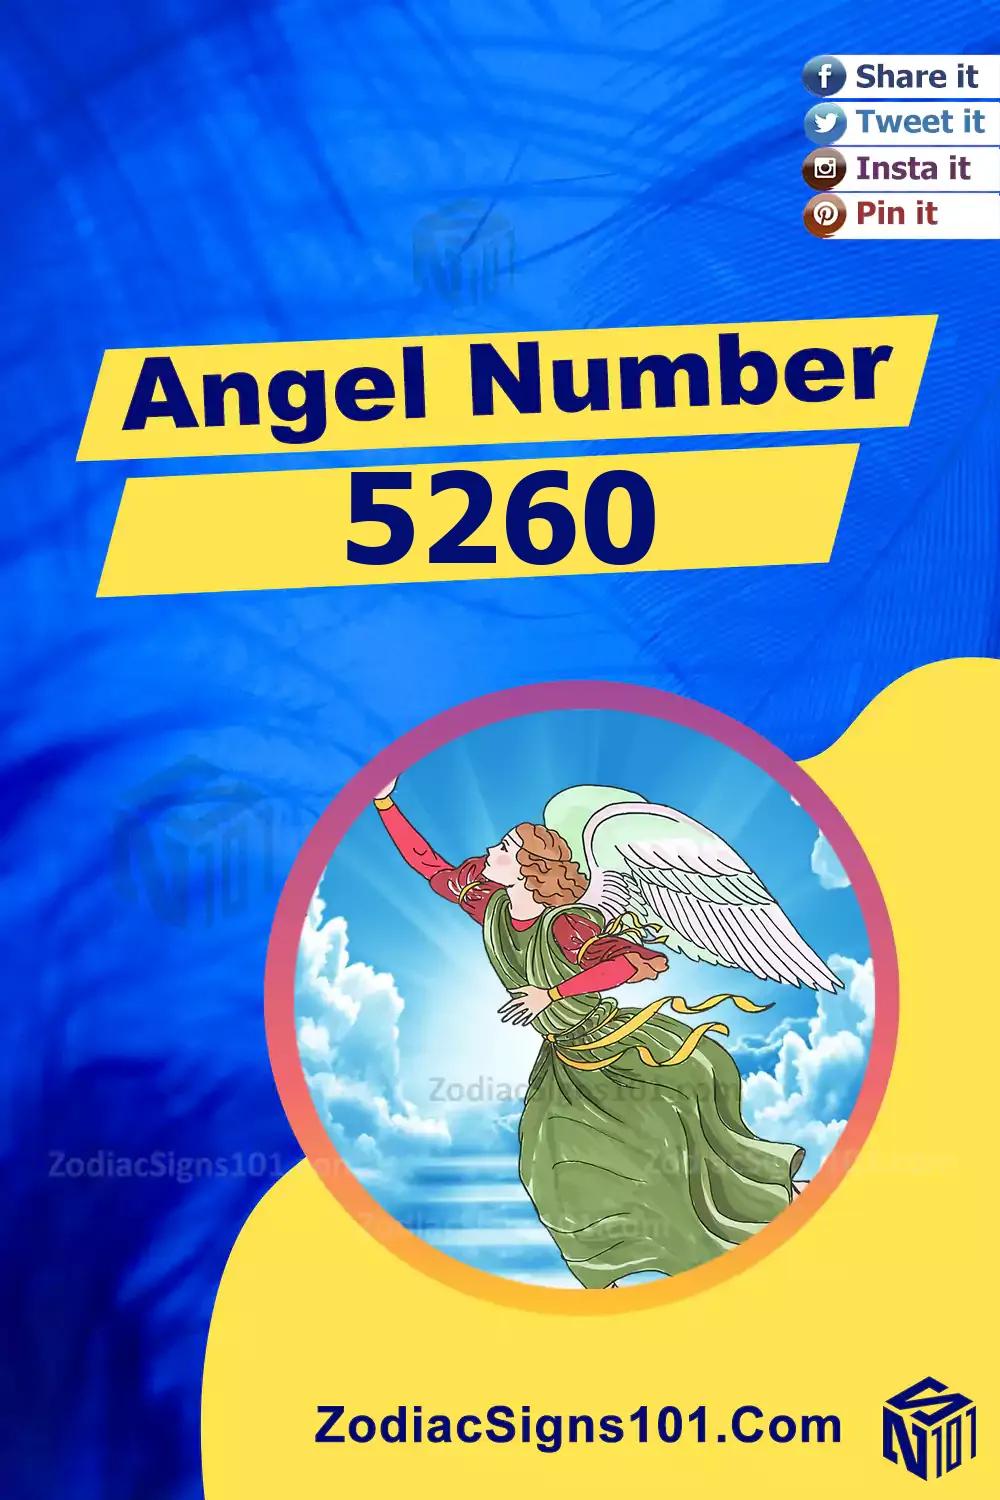 5260-Angel-Number-Meaning.jpg